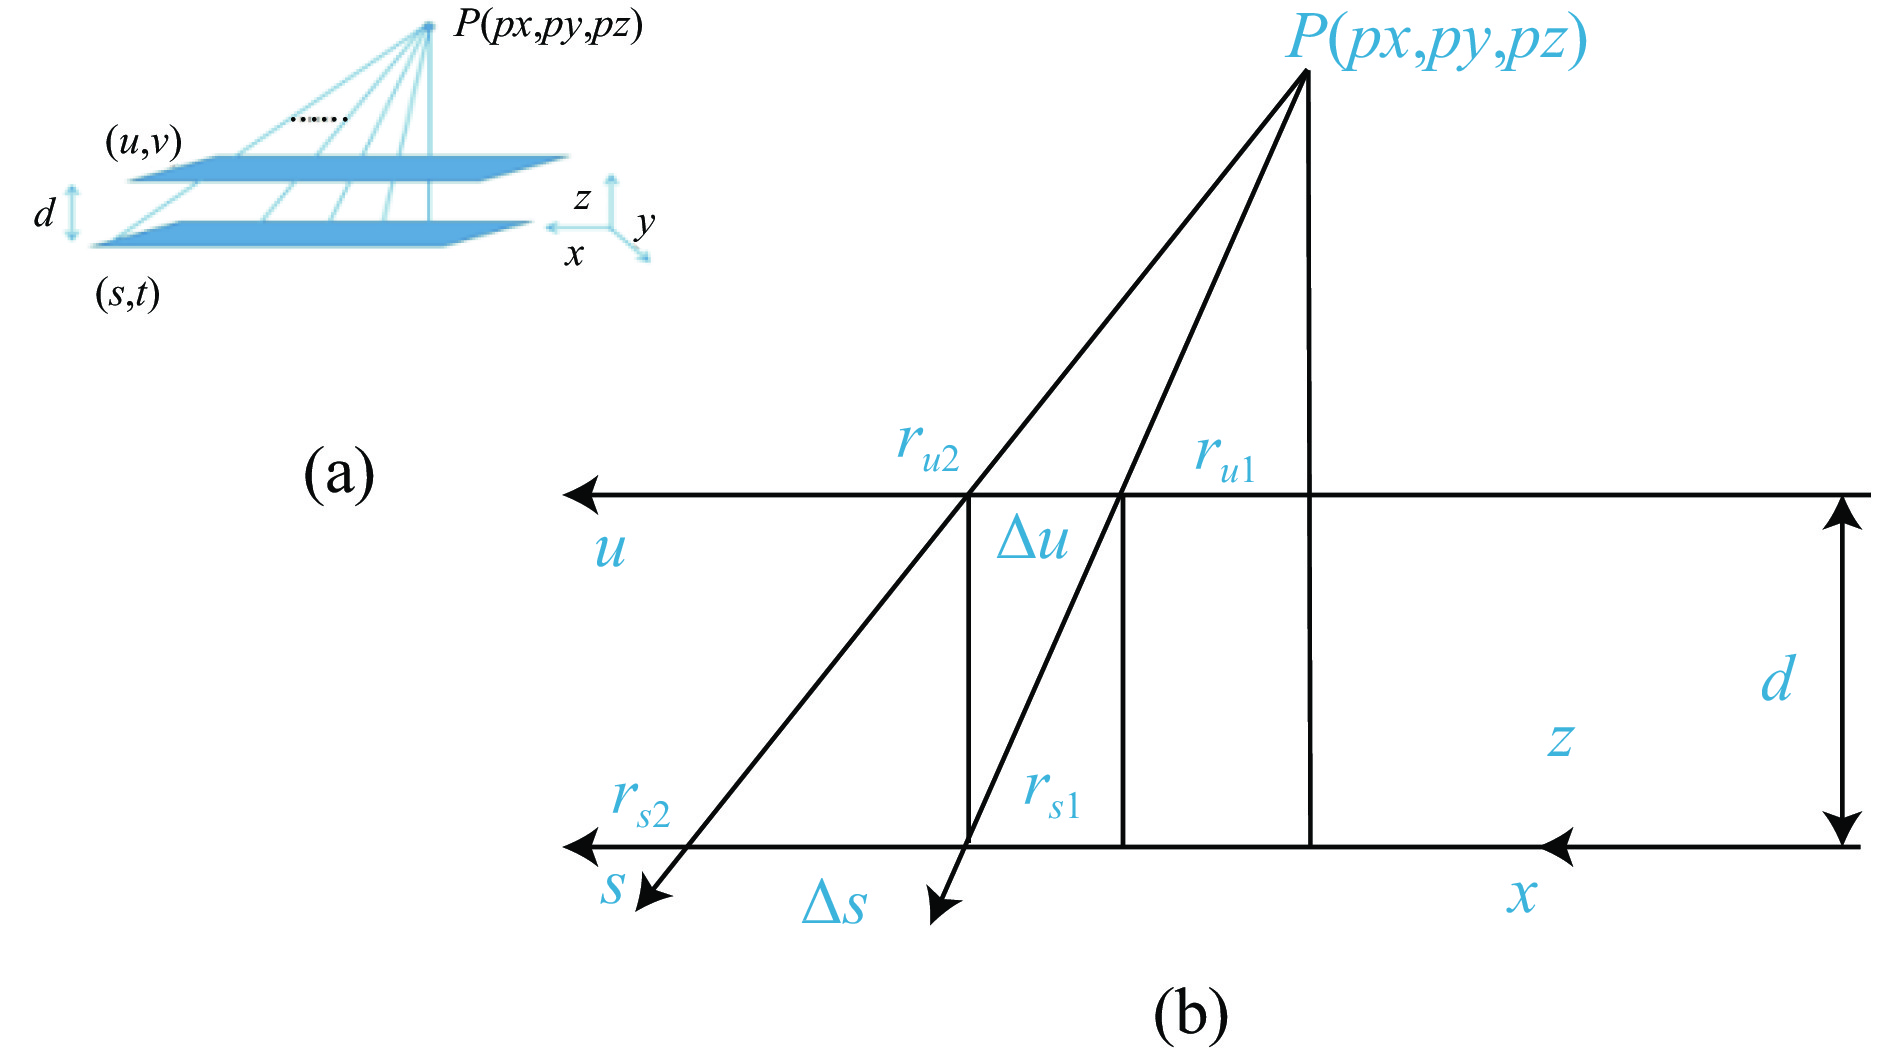 (a) Geometric representation of two plane parameterized; (b) Schematic diagram of geometric analysis of u-splane